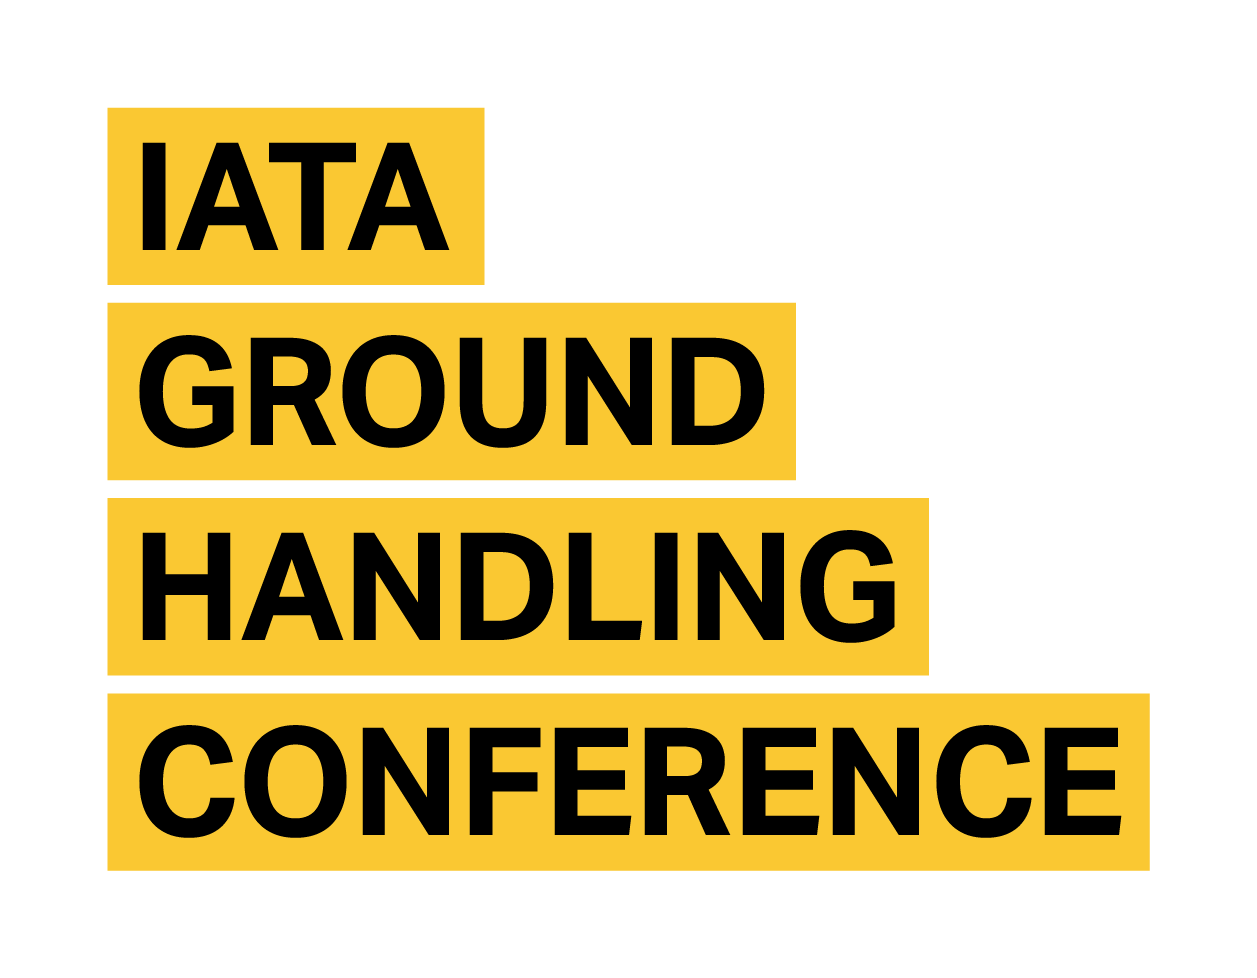 IATA Ground Handling Conference